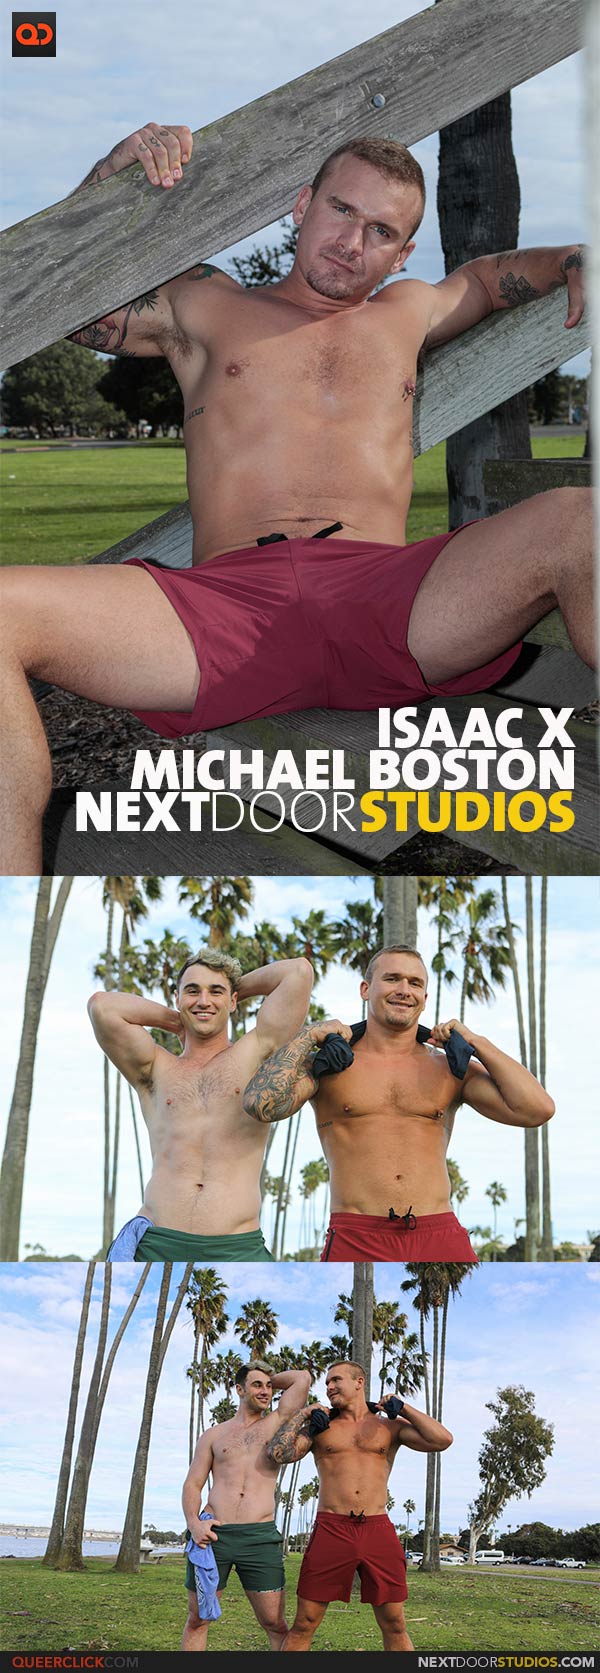 NextDoorStudios: Michael Boston and Isaac X